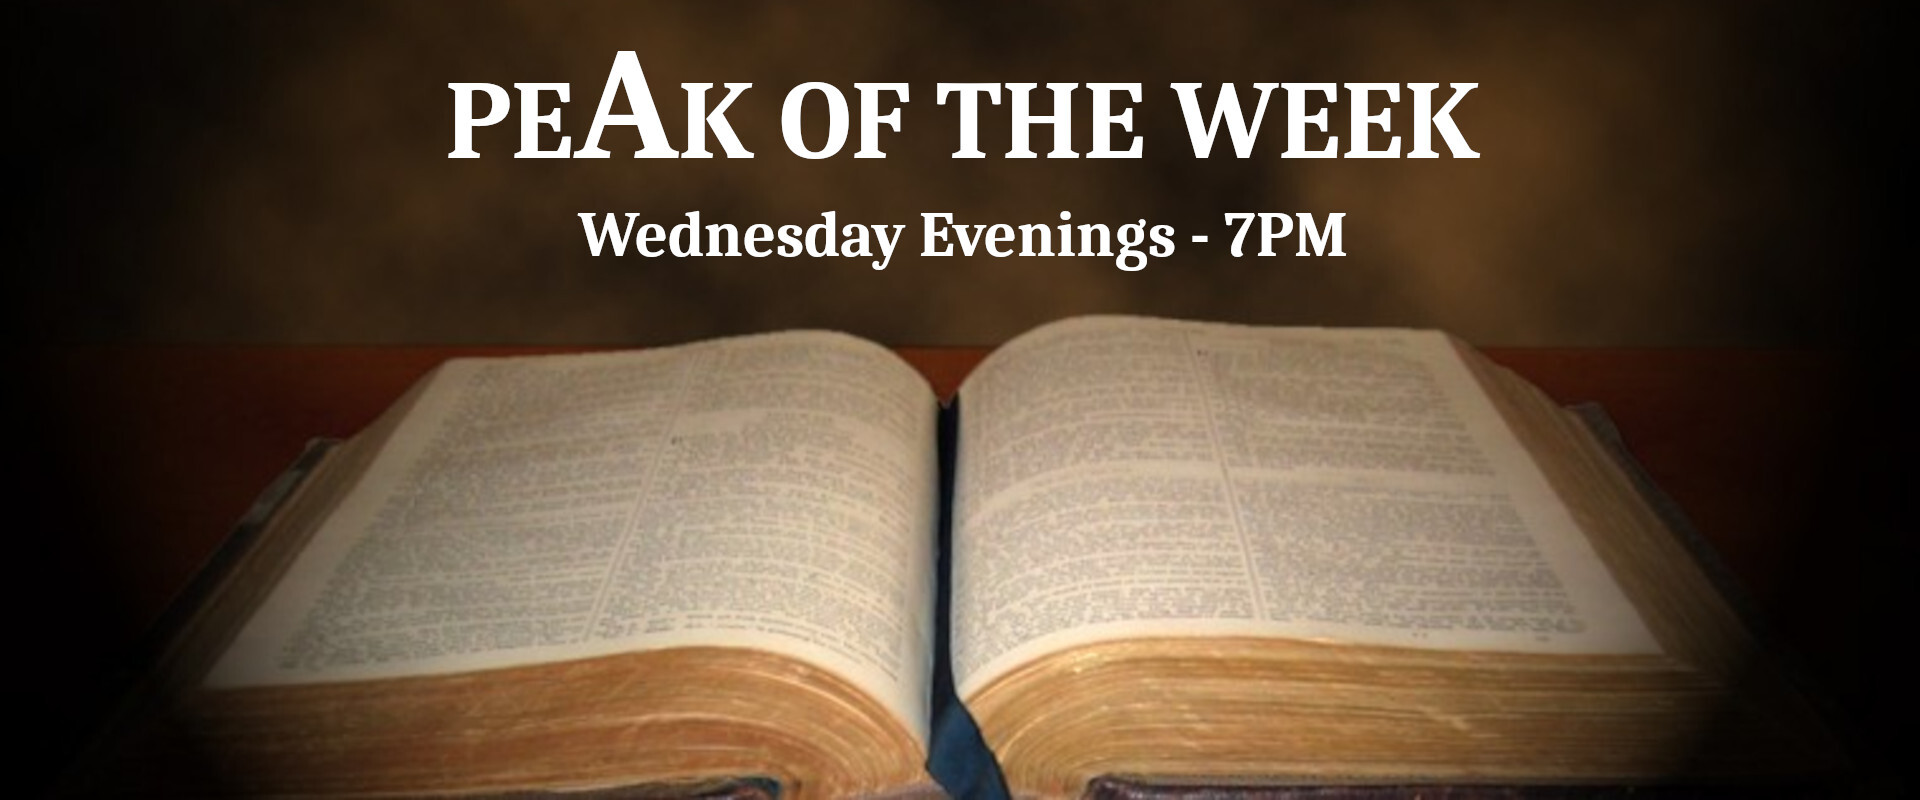 Wednesday Night Bible Study, Prayer, Singing, and Praise